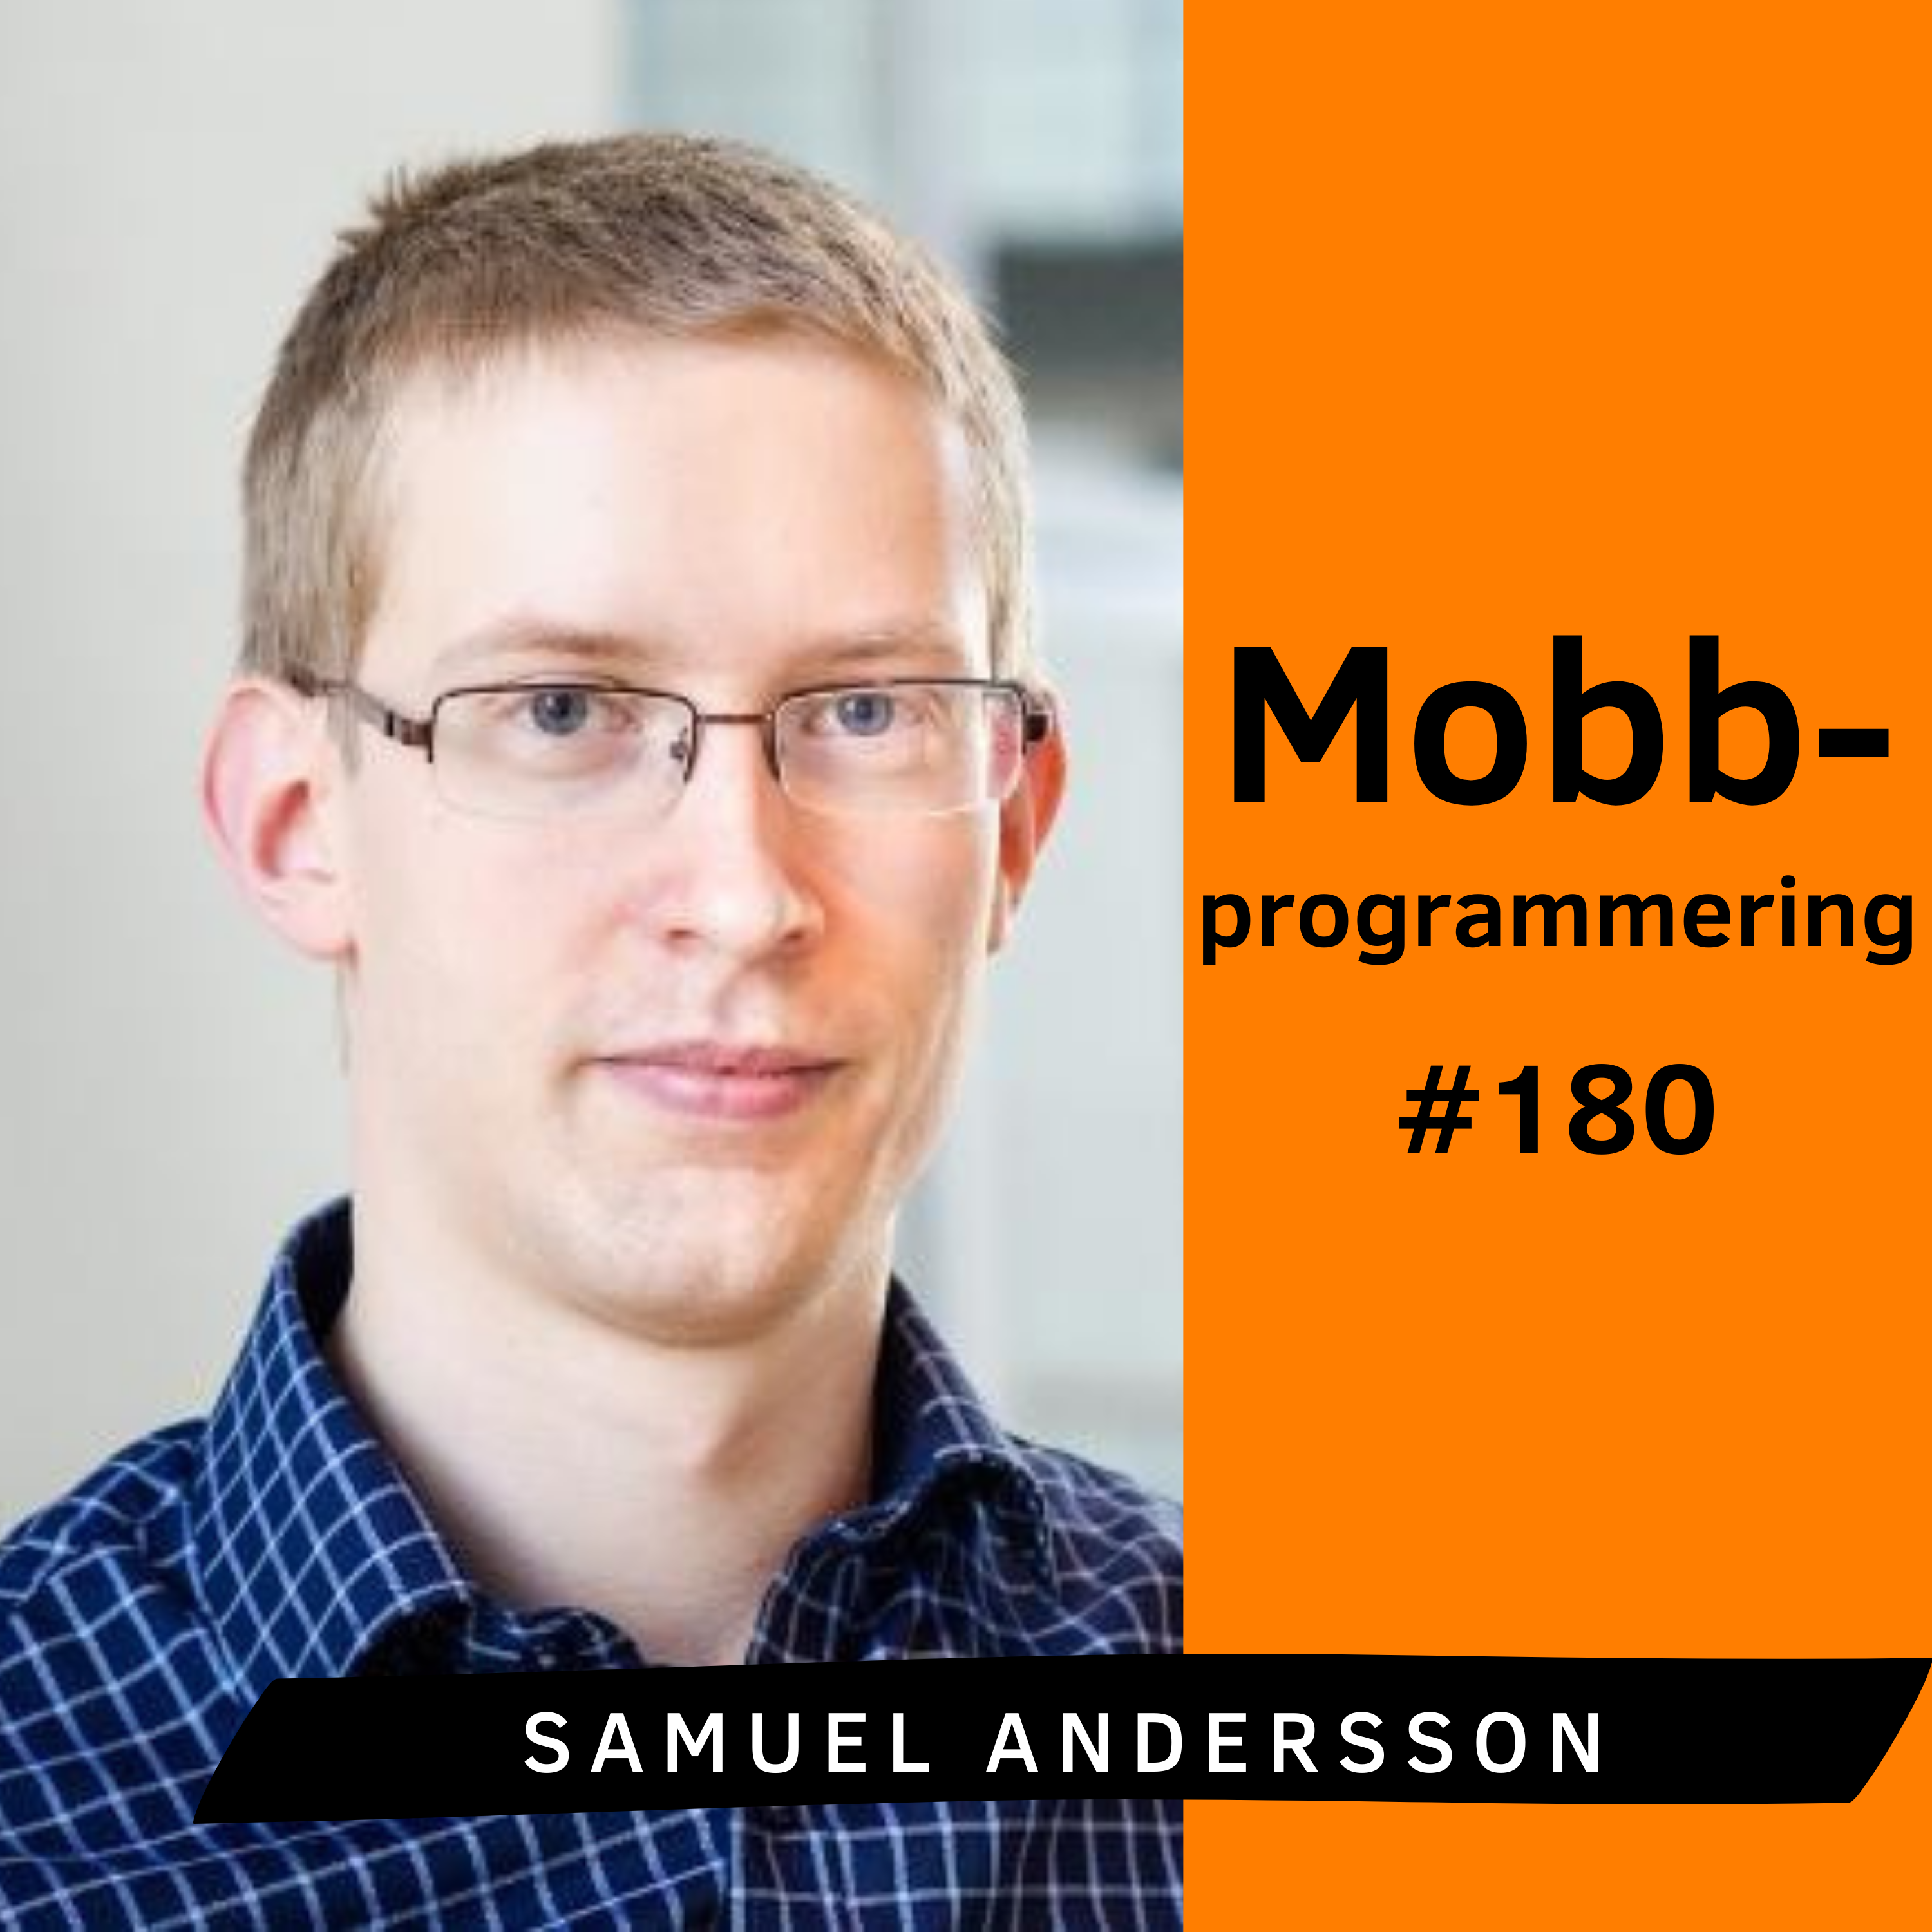 Mobbprogrammering. Samuel Andersson (#180)